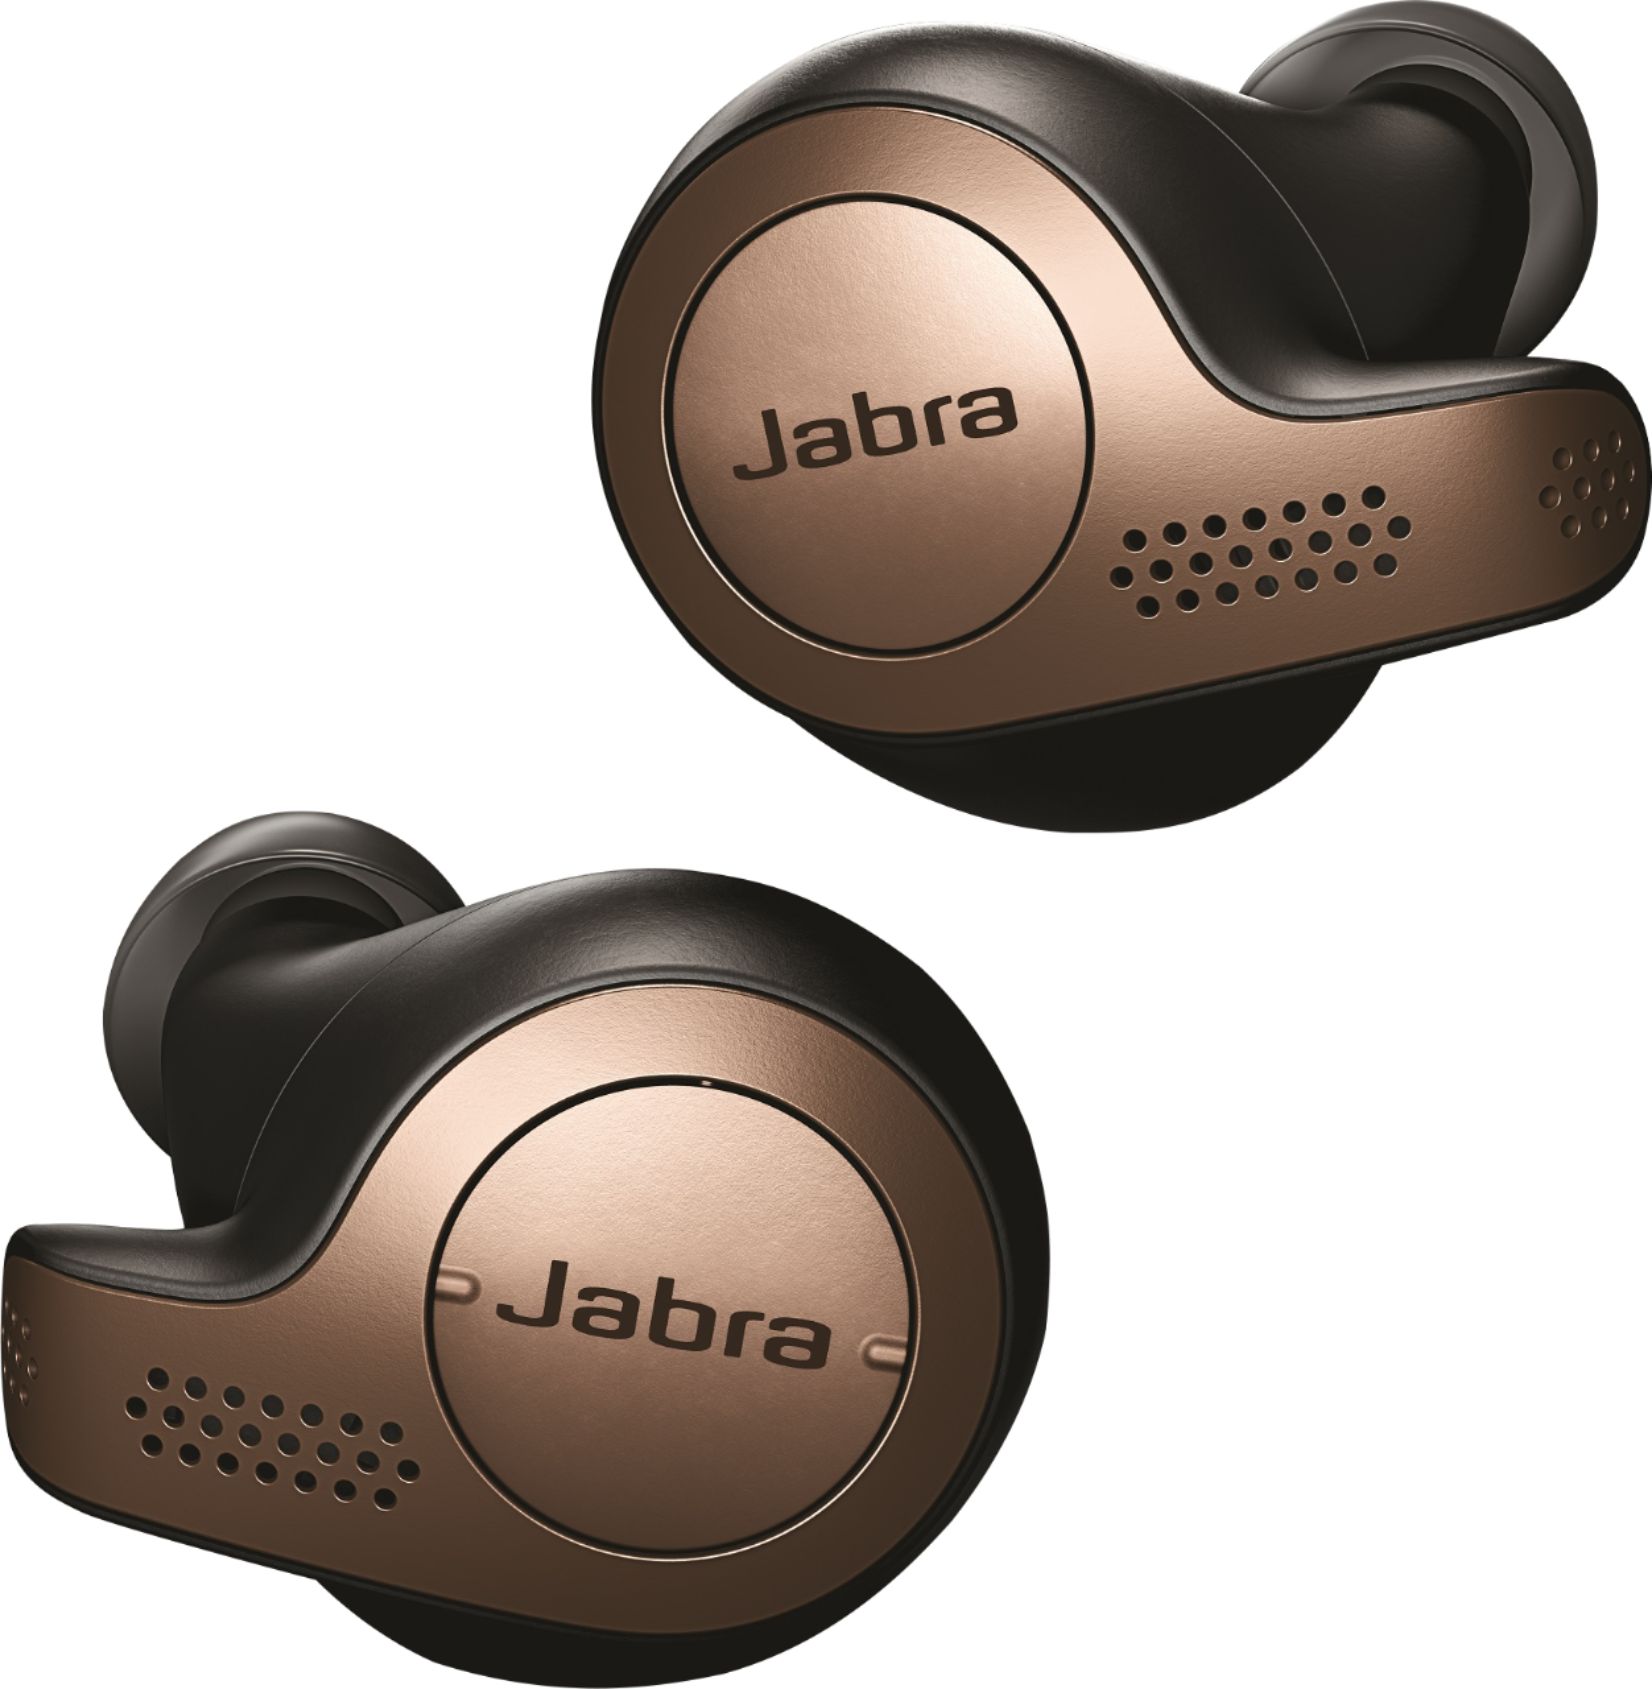 jabra bluetooth headset